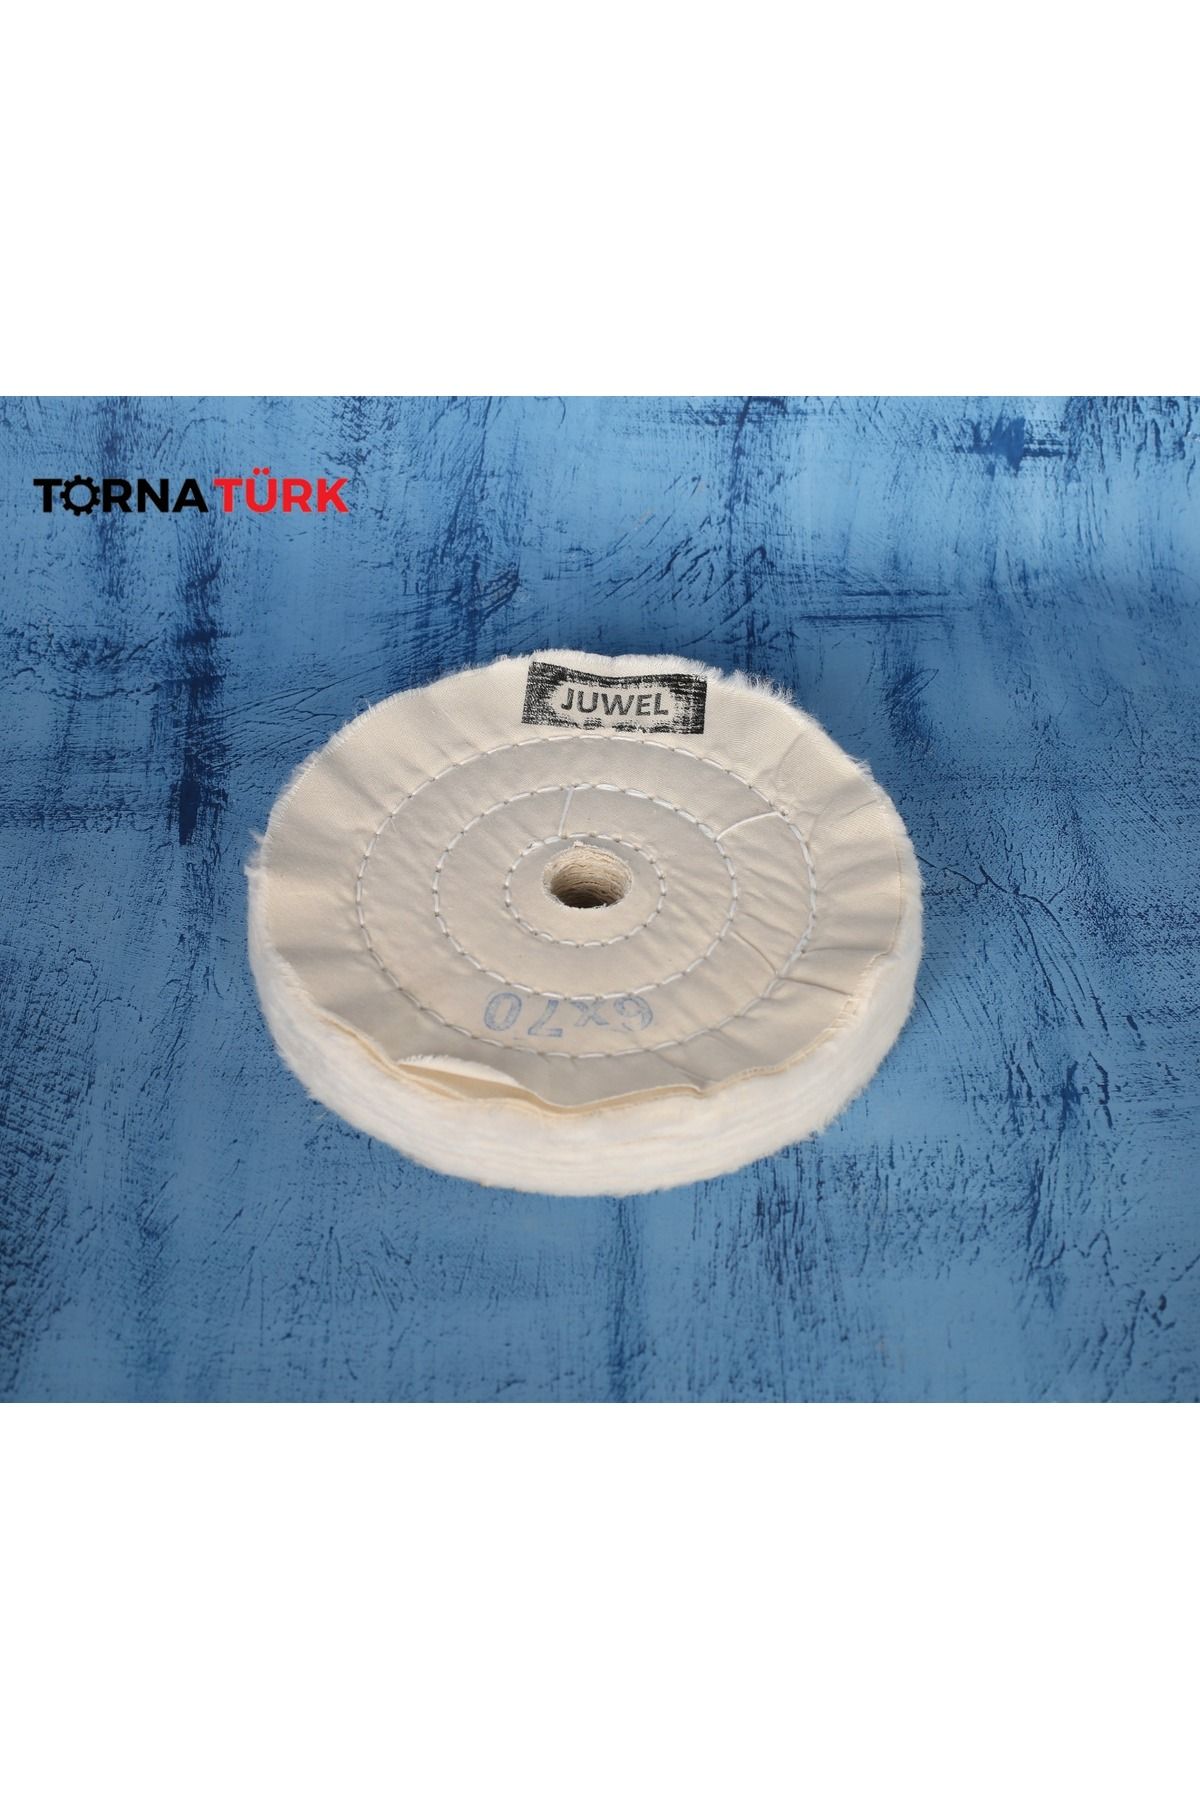 Torna Türk 6 x 70 x delik 20 - 22 mm delik polisaj keçesi ( 150 mm ) extra shine - Tornatürk